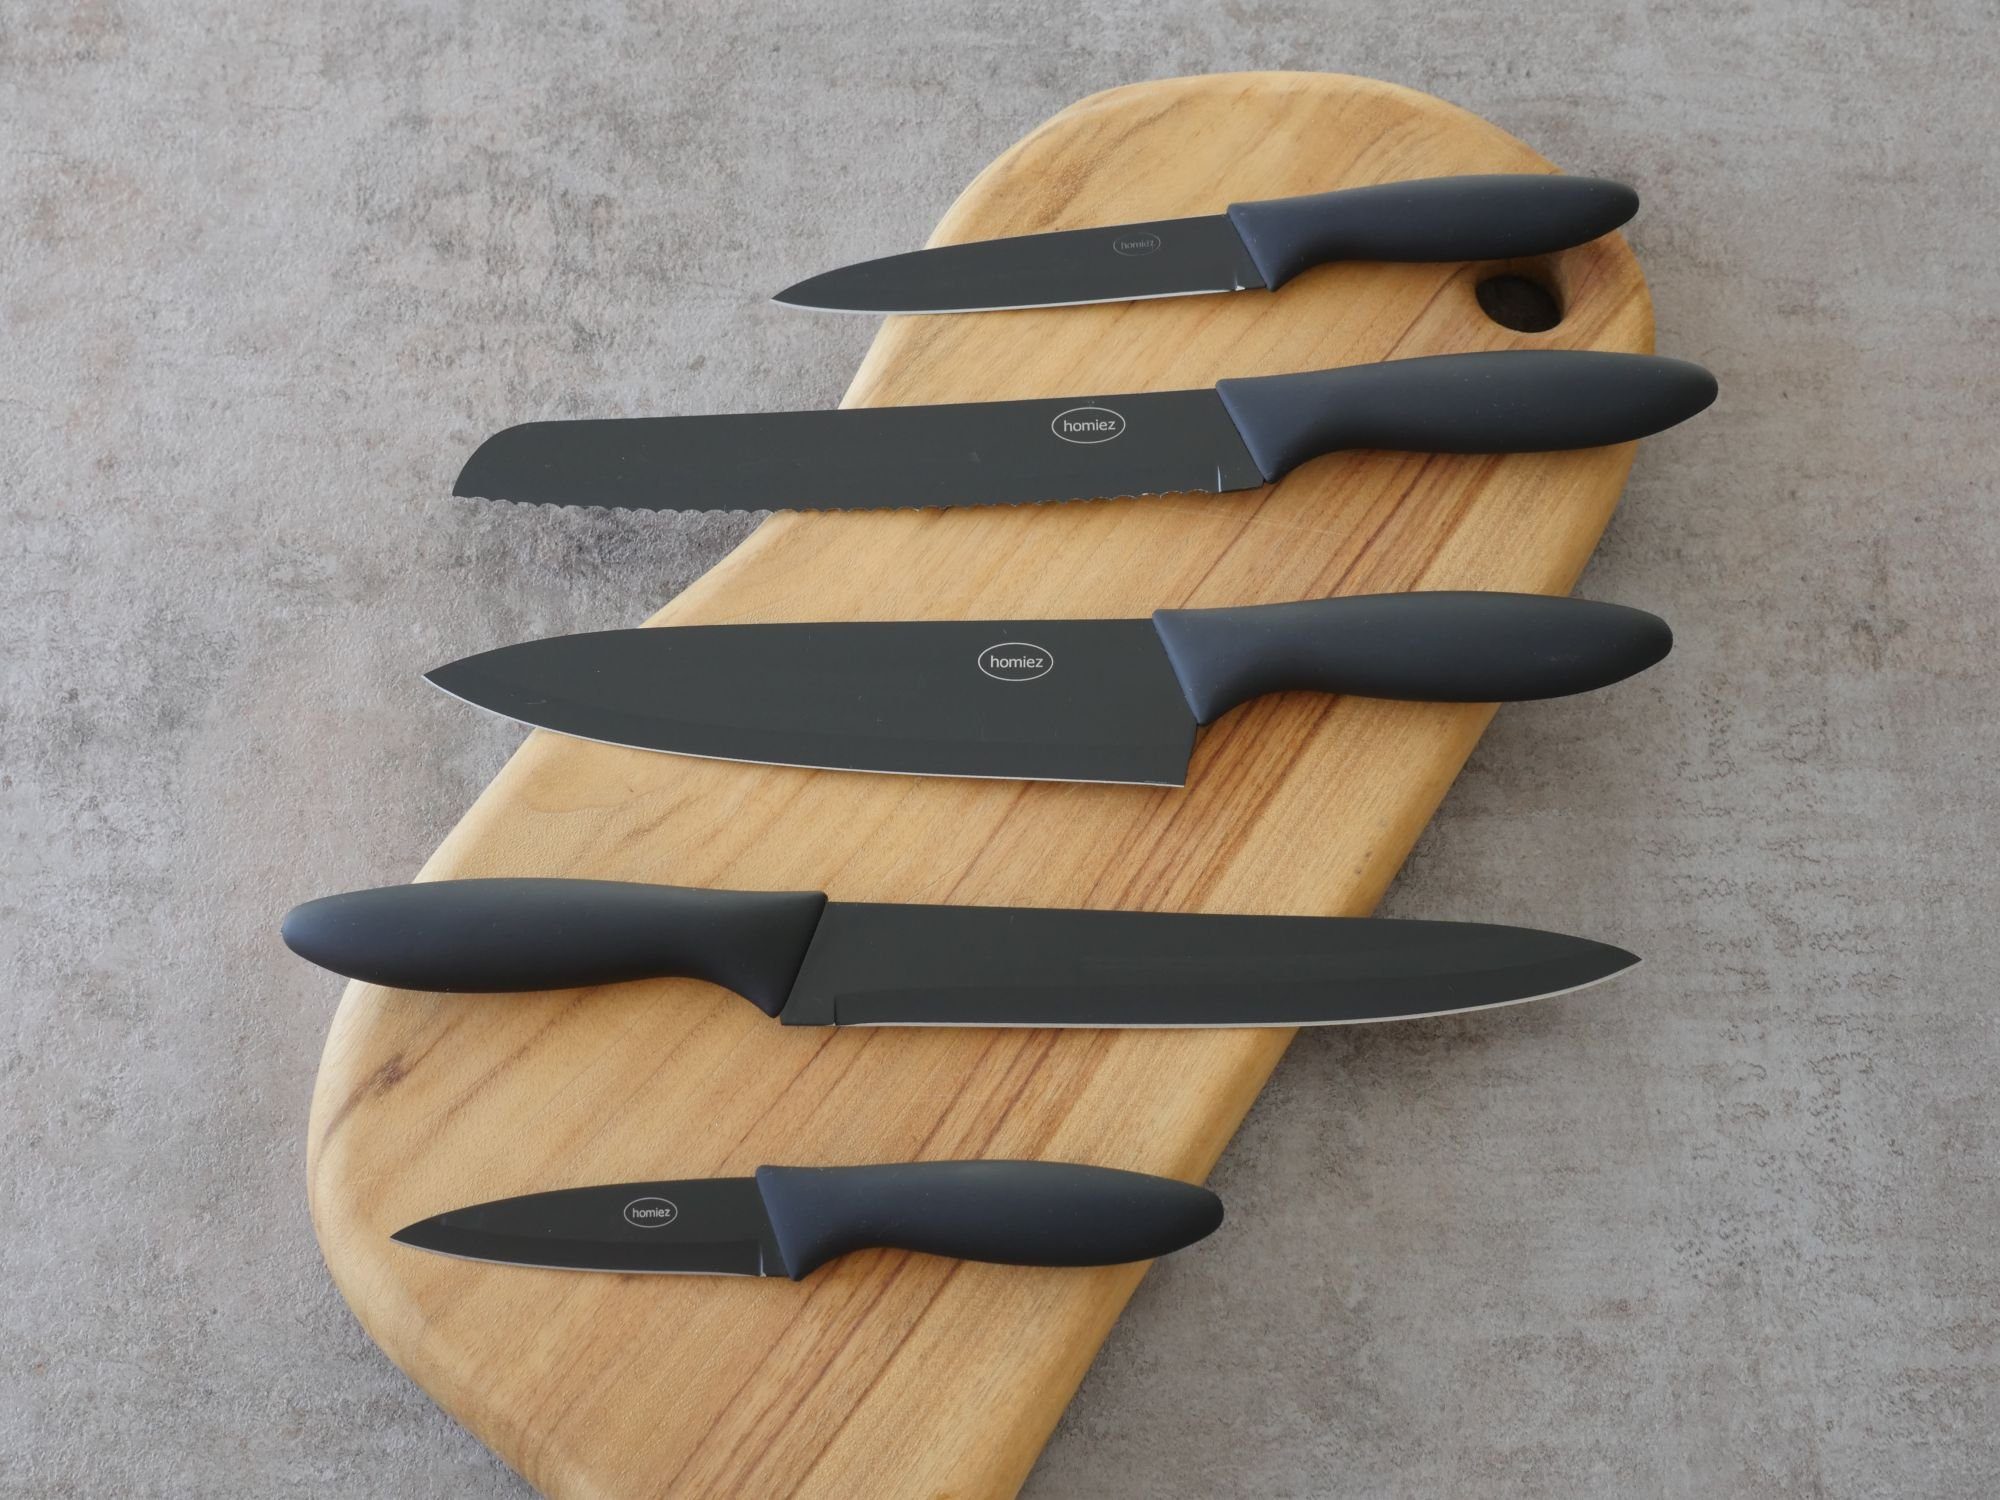 Messer-Set Klingenschutz, mit in (Set, ColourCut, homiez 5-tlg), Messerset 5-teiliges schwarz